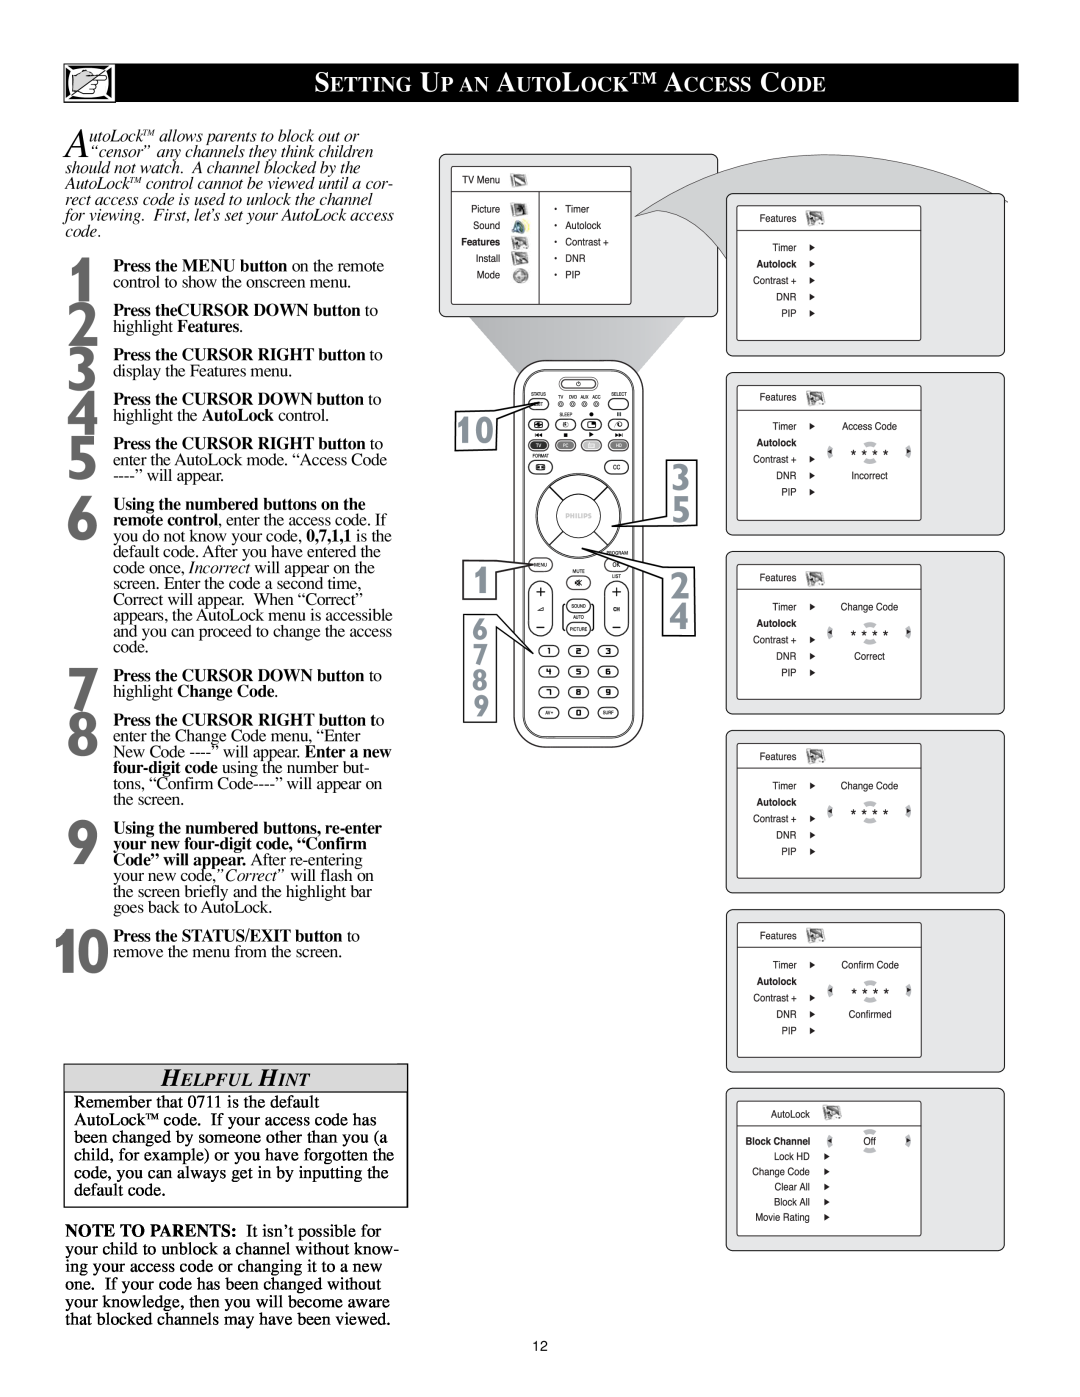 Philips 17PF9946/37 user manual Setting Up An Autolock Access Code, Helpful Hint 